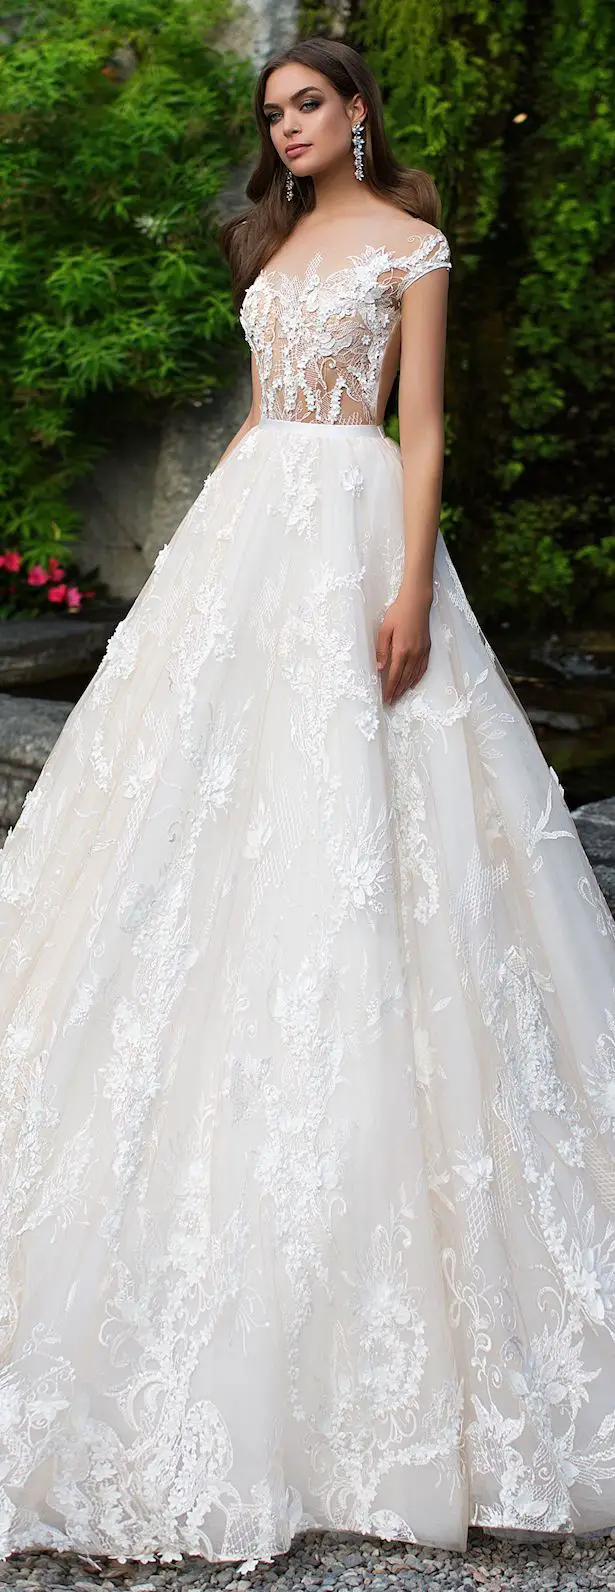 Wedding Dress by Milla Nova White Desire 2017 Bridal Collection - Annet